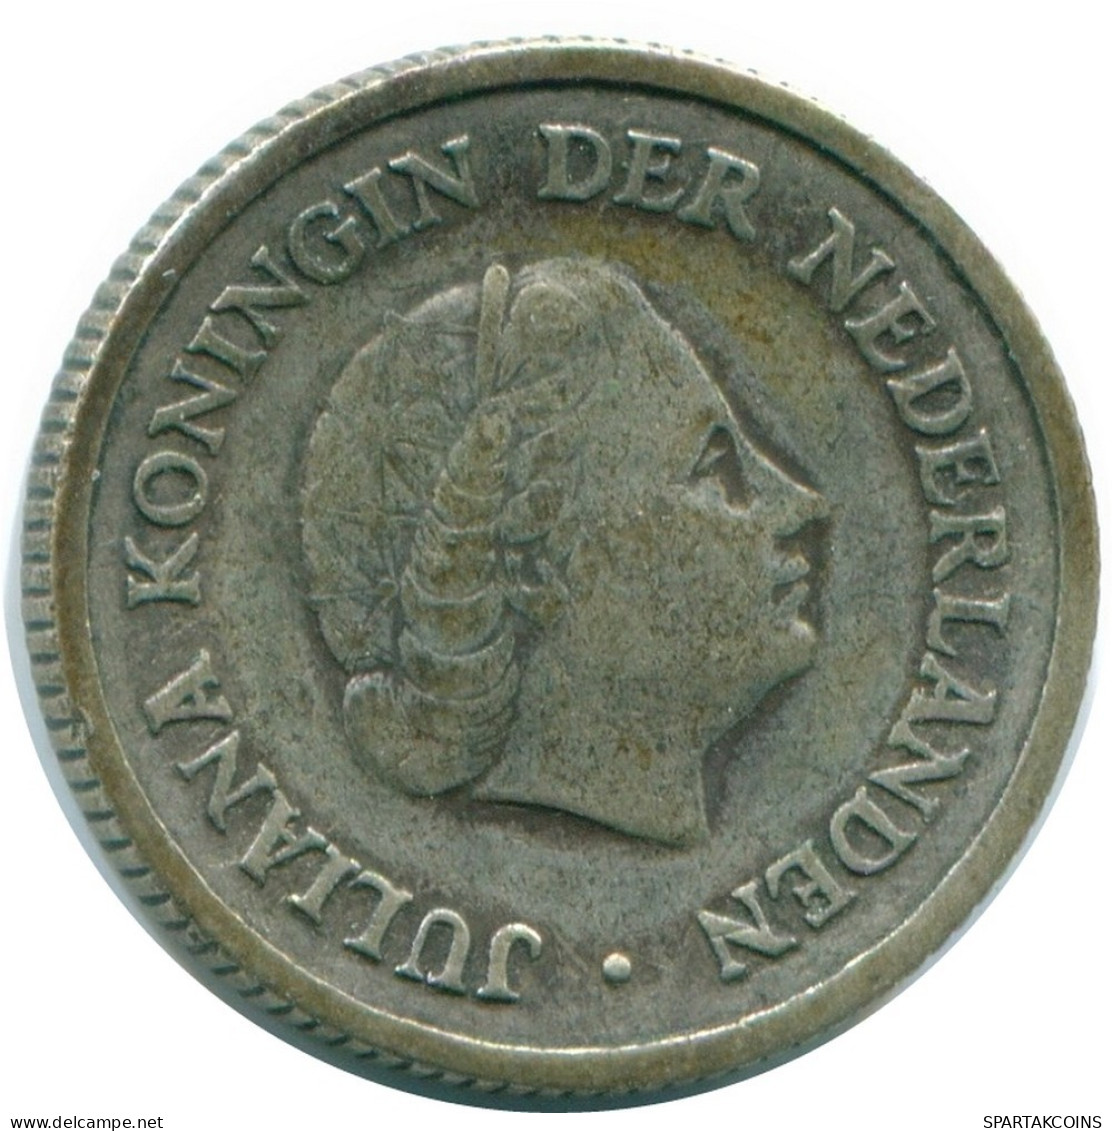 1/4 GULDEN 1956 NIEDERLÄNDISCHE ANTILLEN SILBER Koloniale Münze #NL10932.4.D.A - Netherlands Antilles